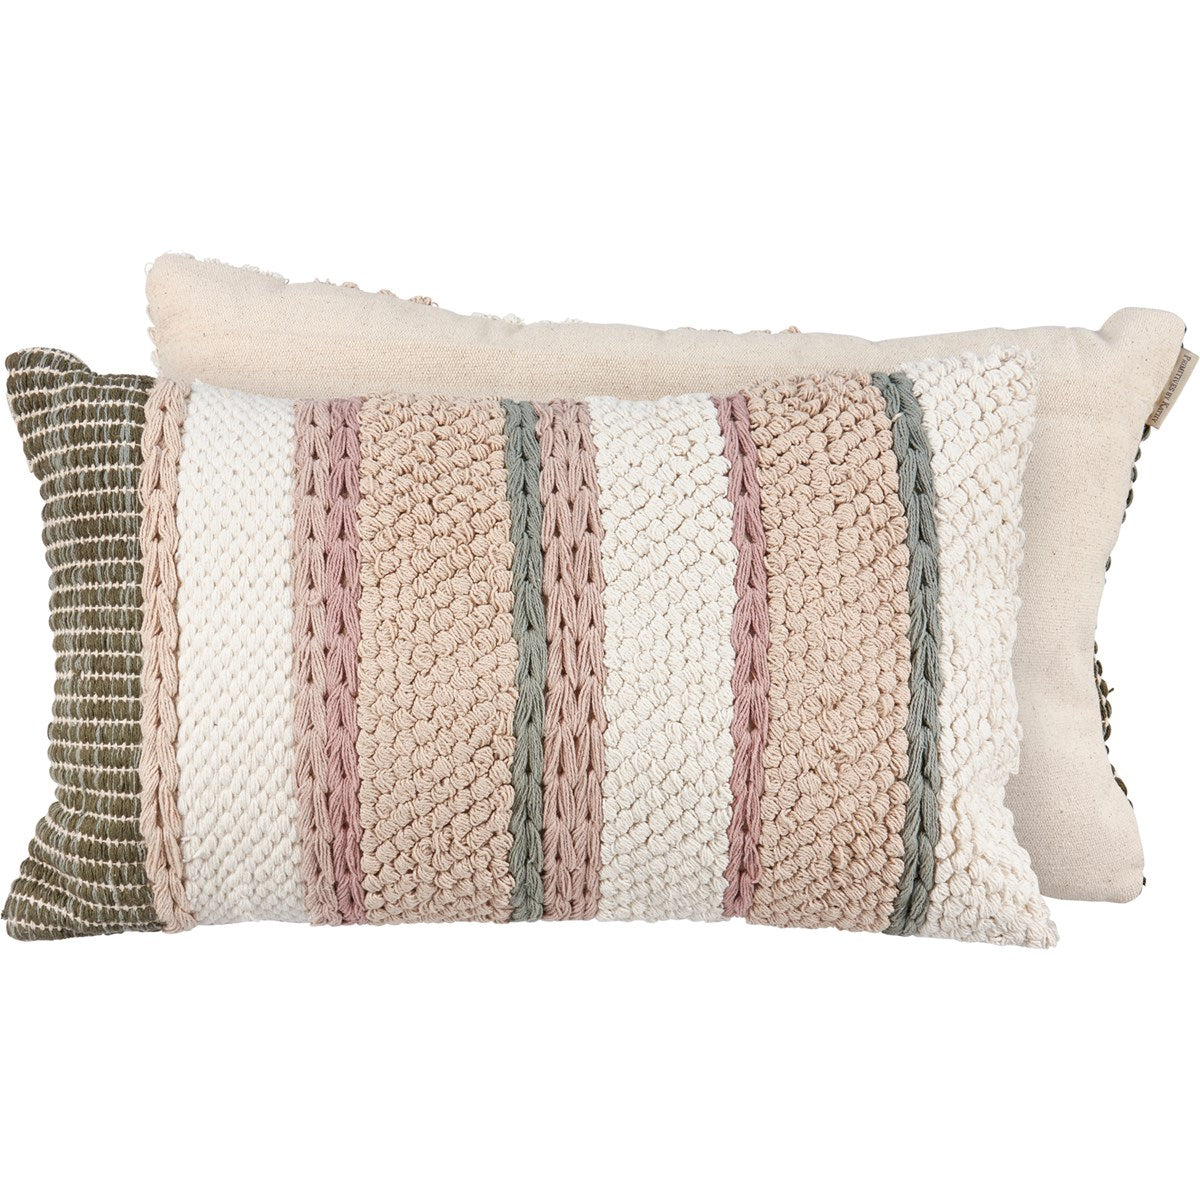 Striped Cottage Pillow 25" Neutral Tones